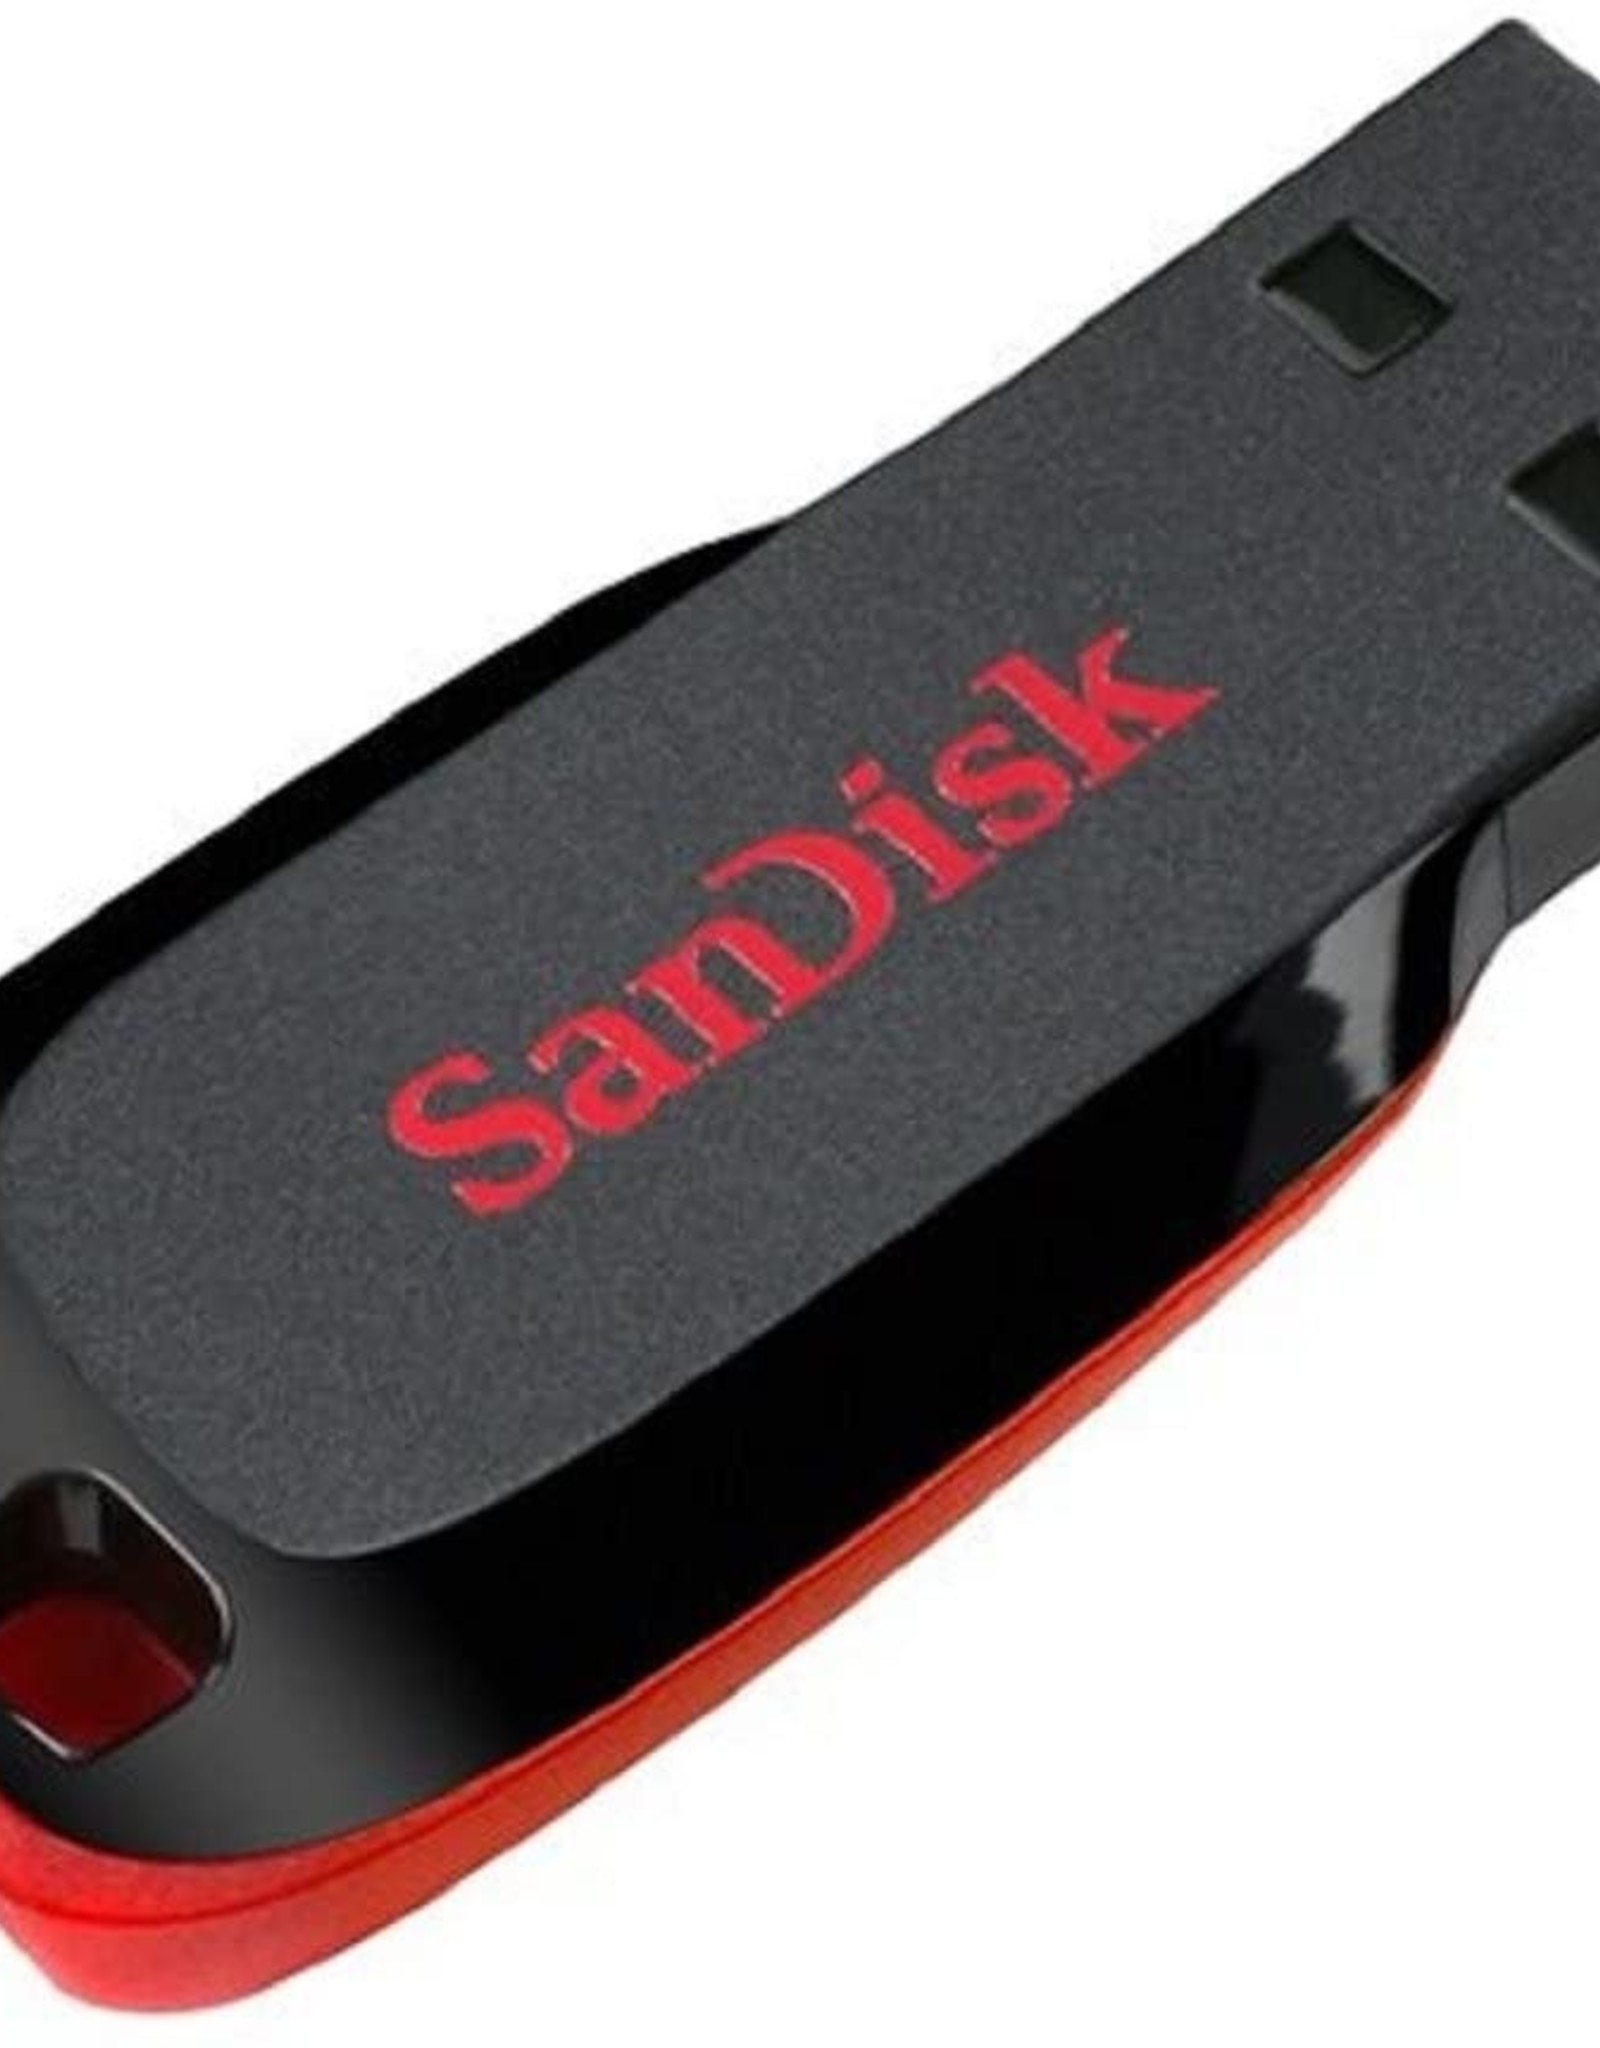 Sandisk SanDisk 16GB Cruzer Blade USB 2.0 Drive